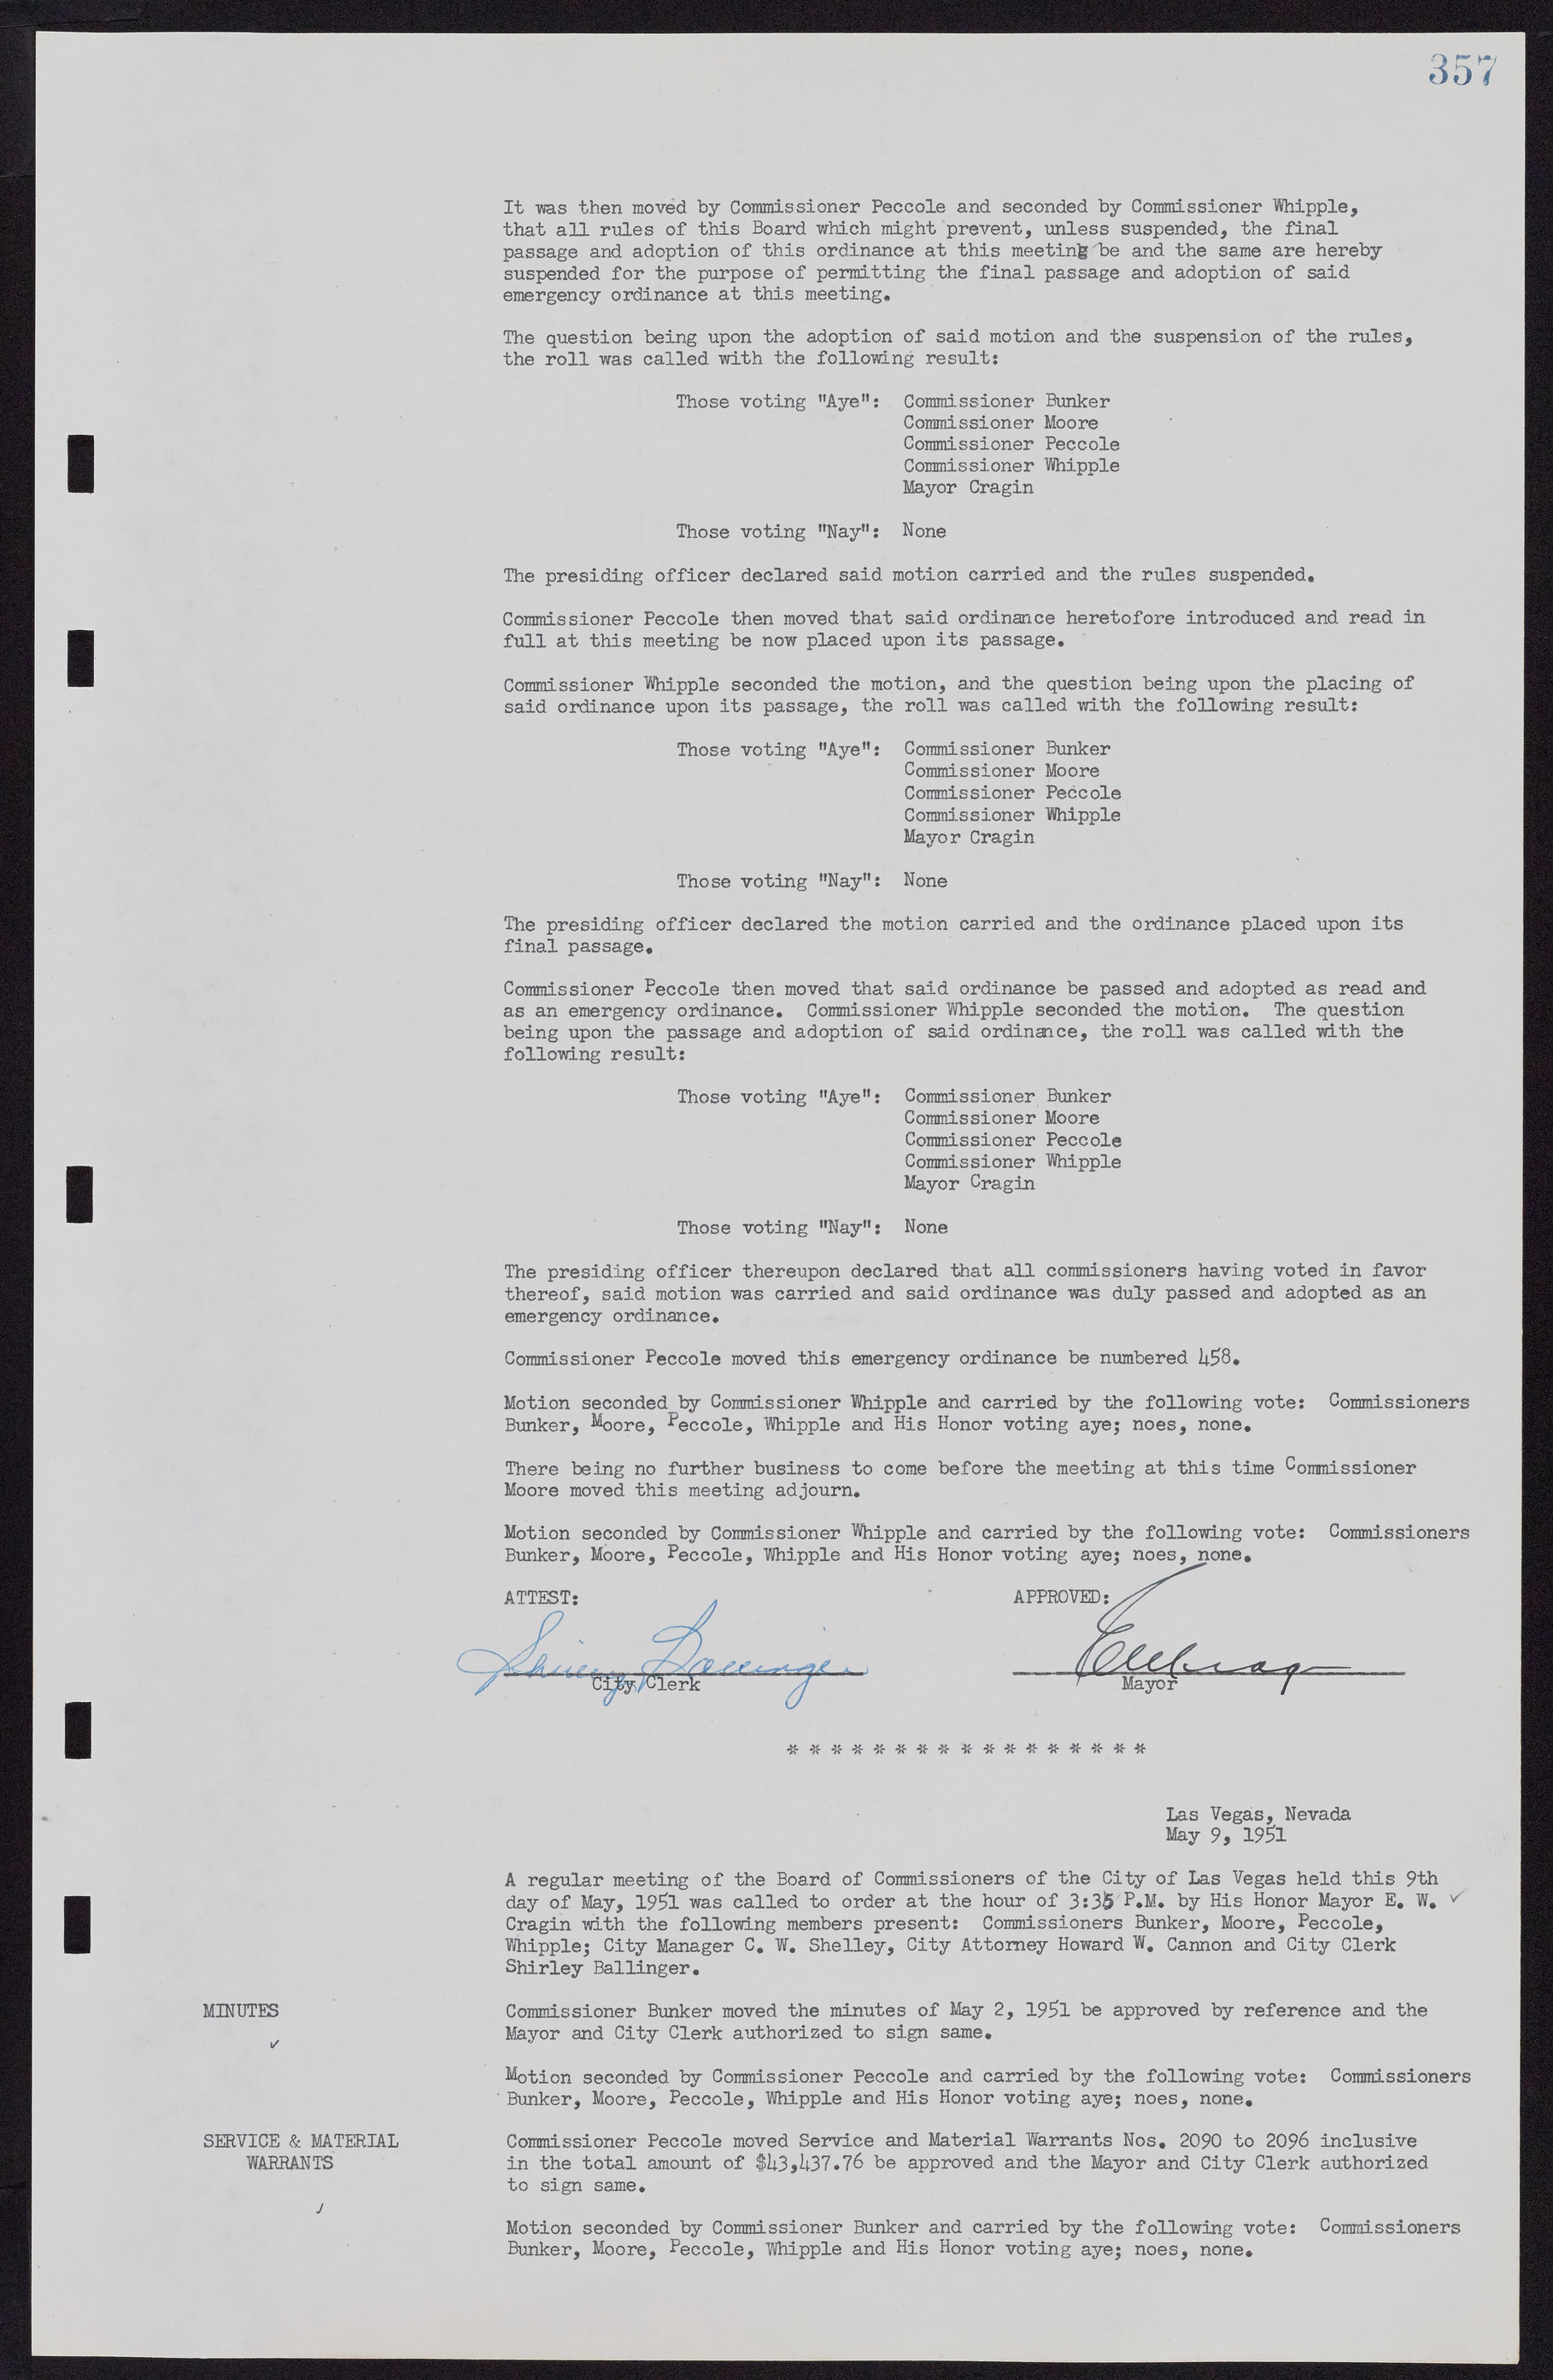 Las Vegas City Commission Minutes, November 7, 1949 to May 21, 1952, lvc000007-369